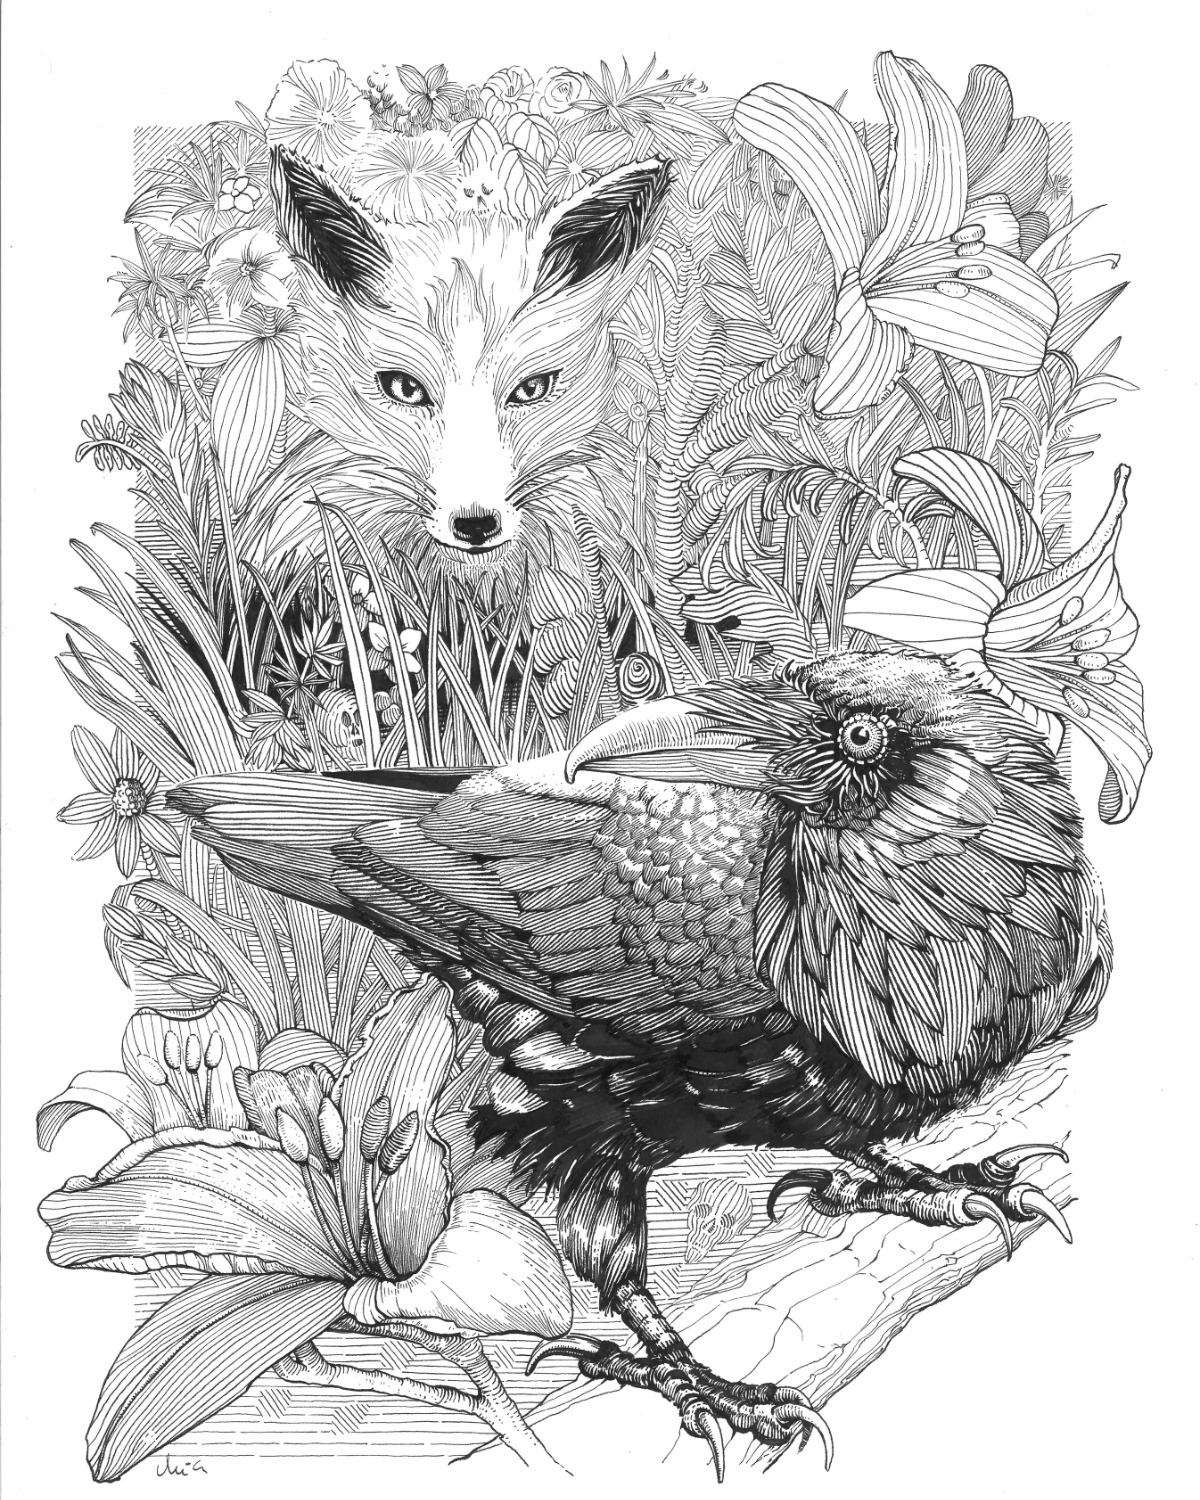 Fox and crow illustration